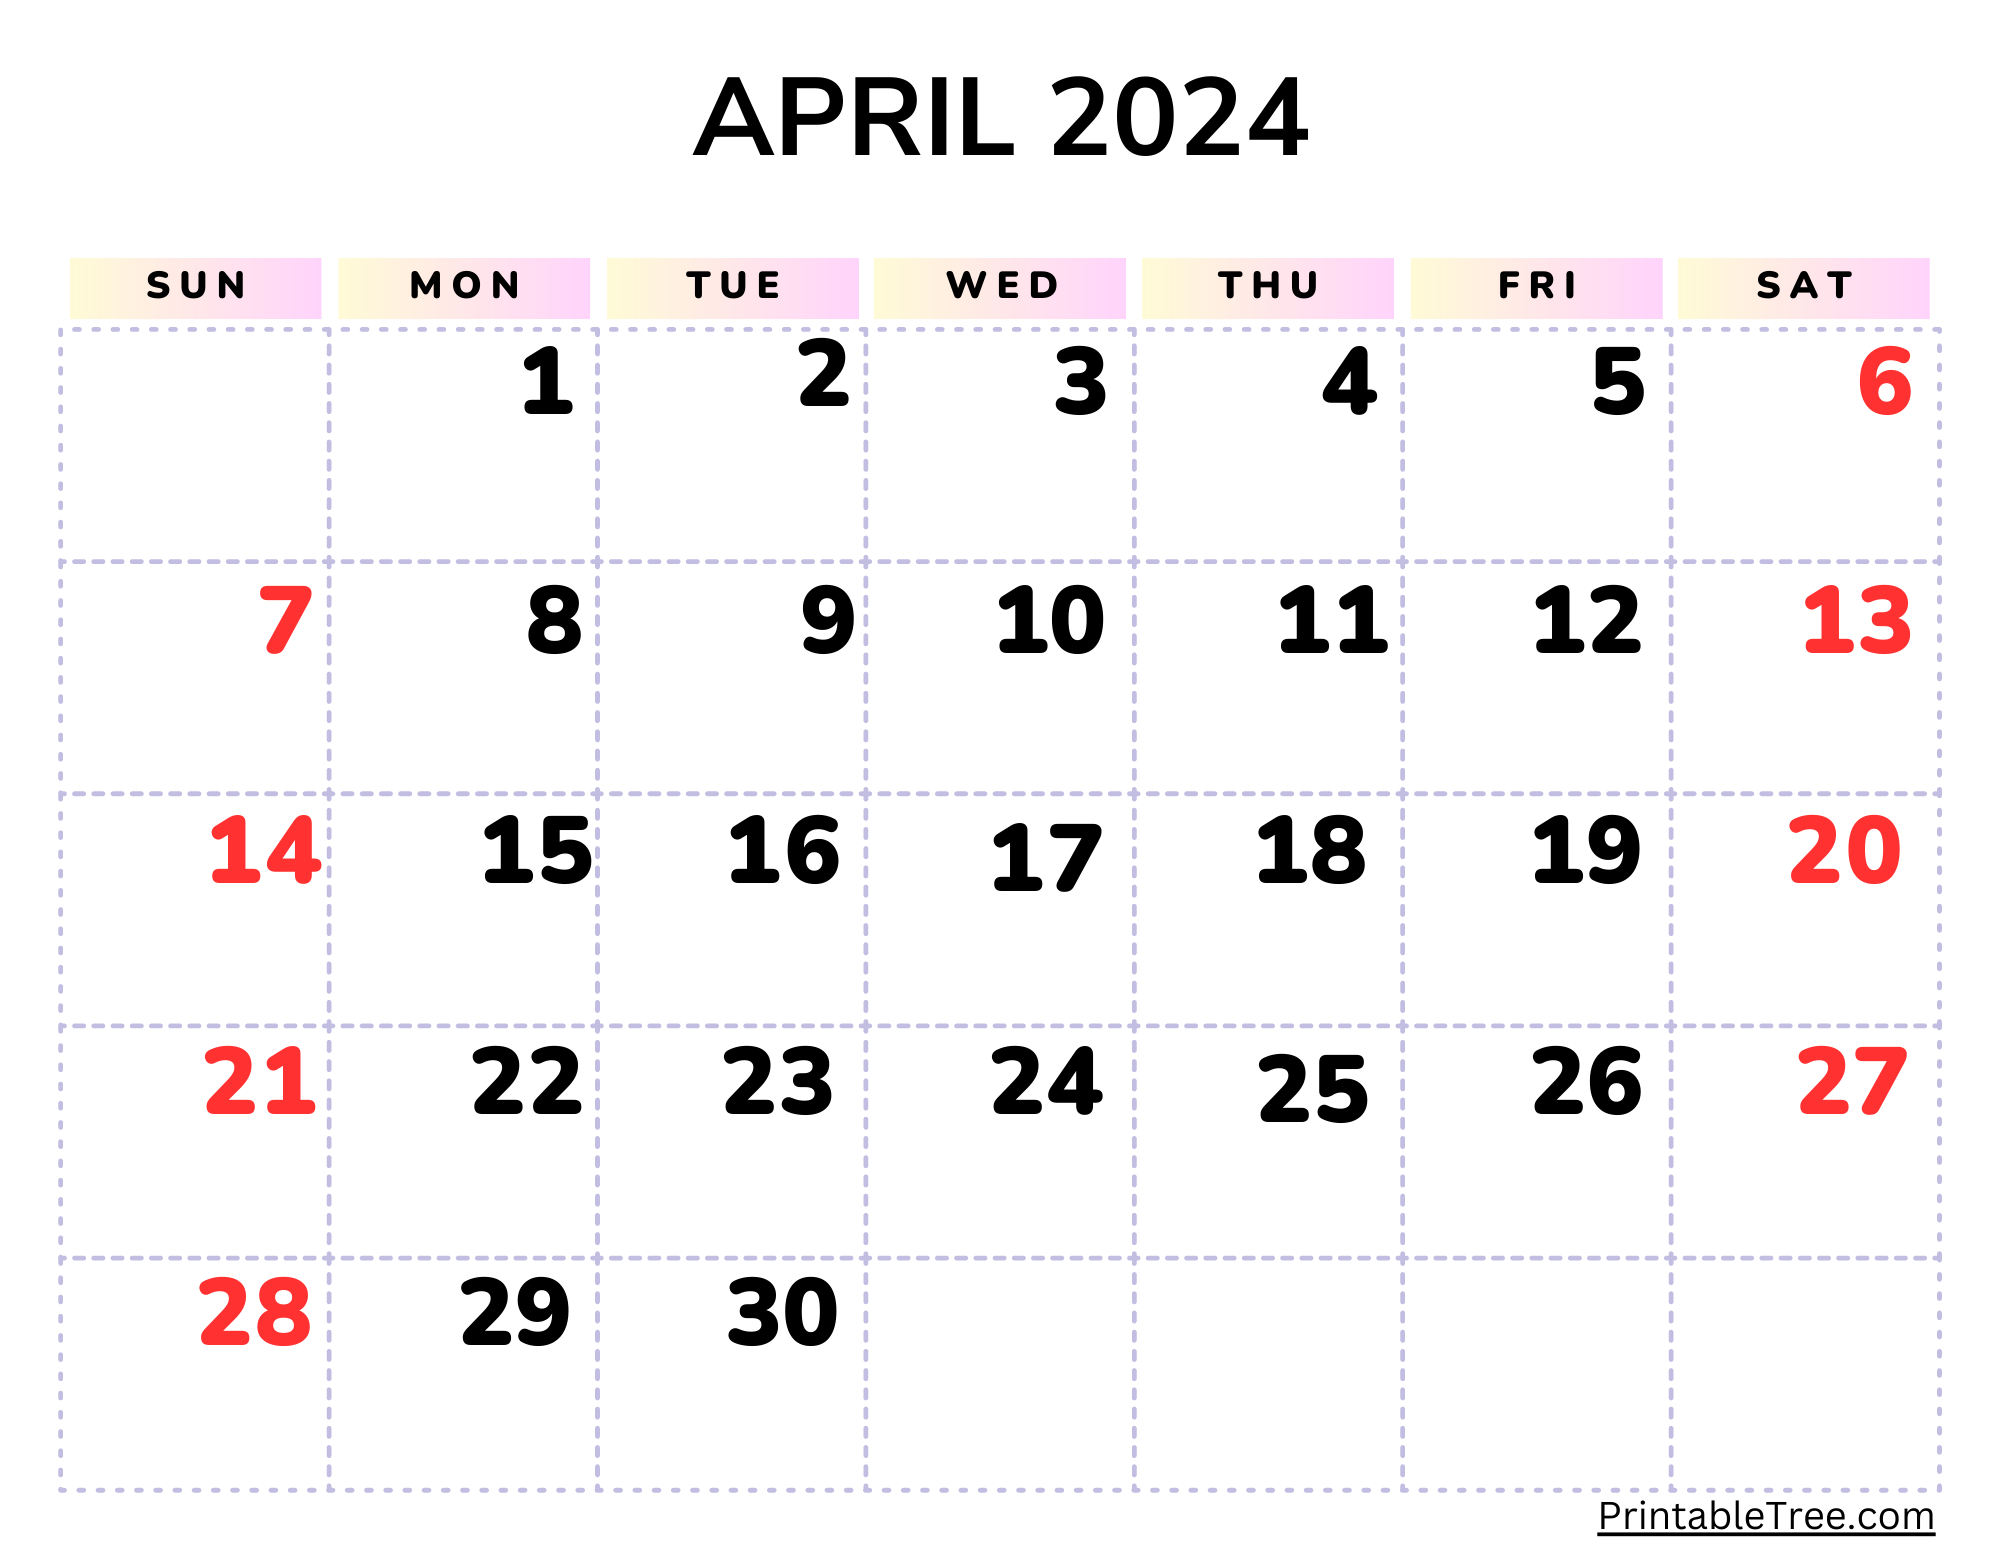 Blank April 2024 Calendar Printable Pdf Template With Holidays pertaining to Free Printable April 2024 Calendar Large